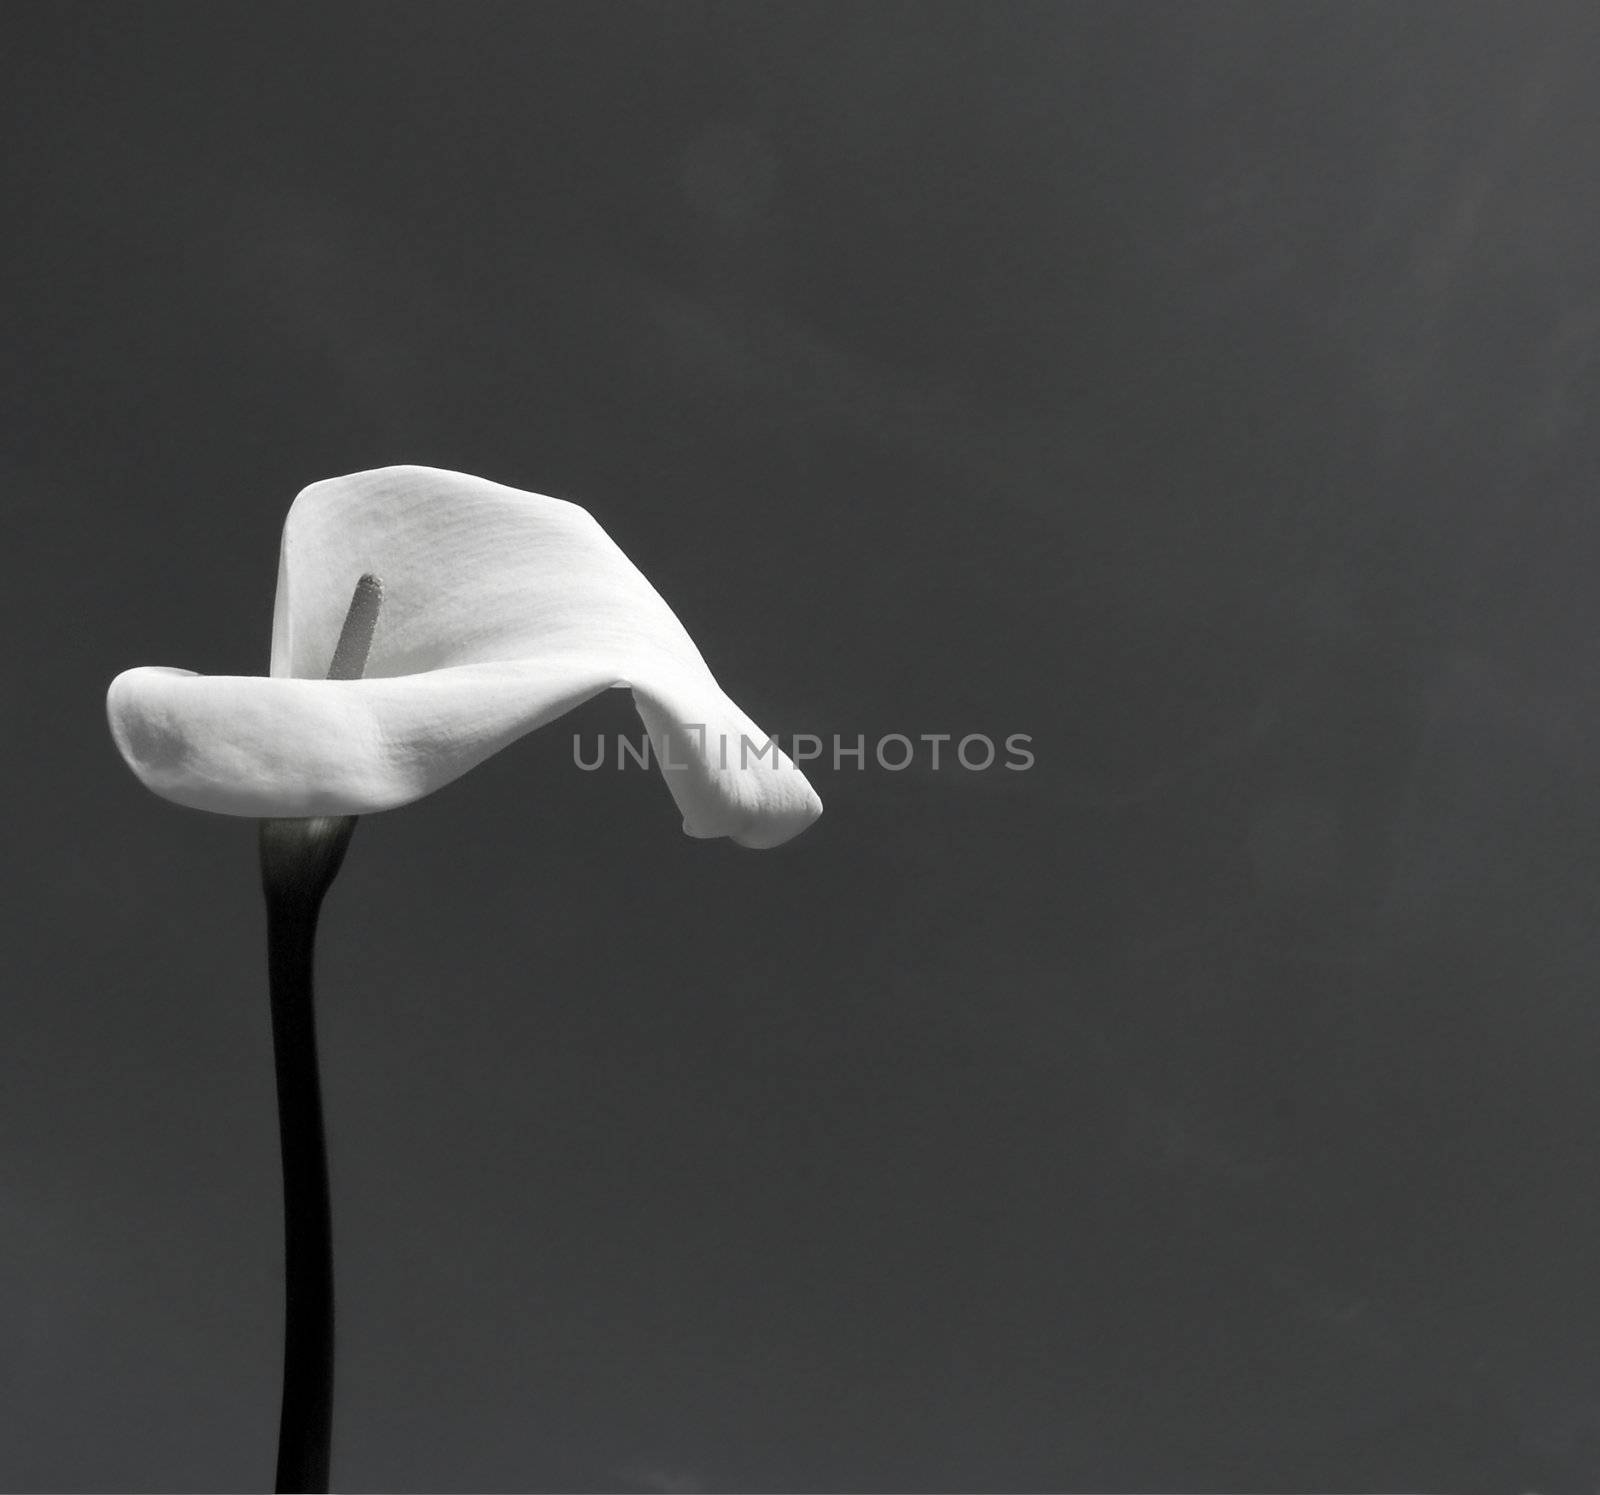 Calla  flower (Zantedeschia aethiopica) in black and white with copy space